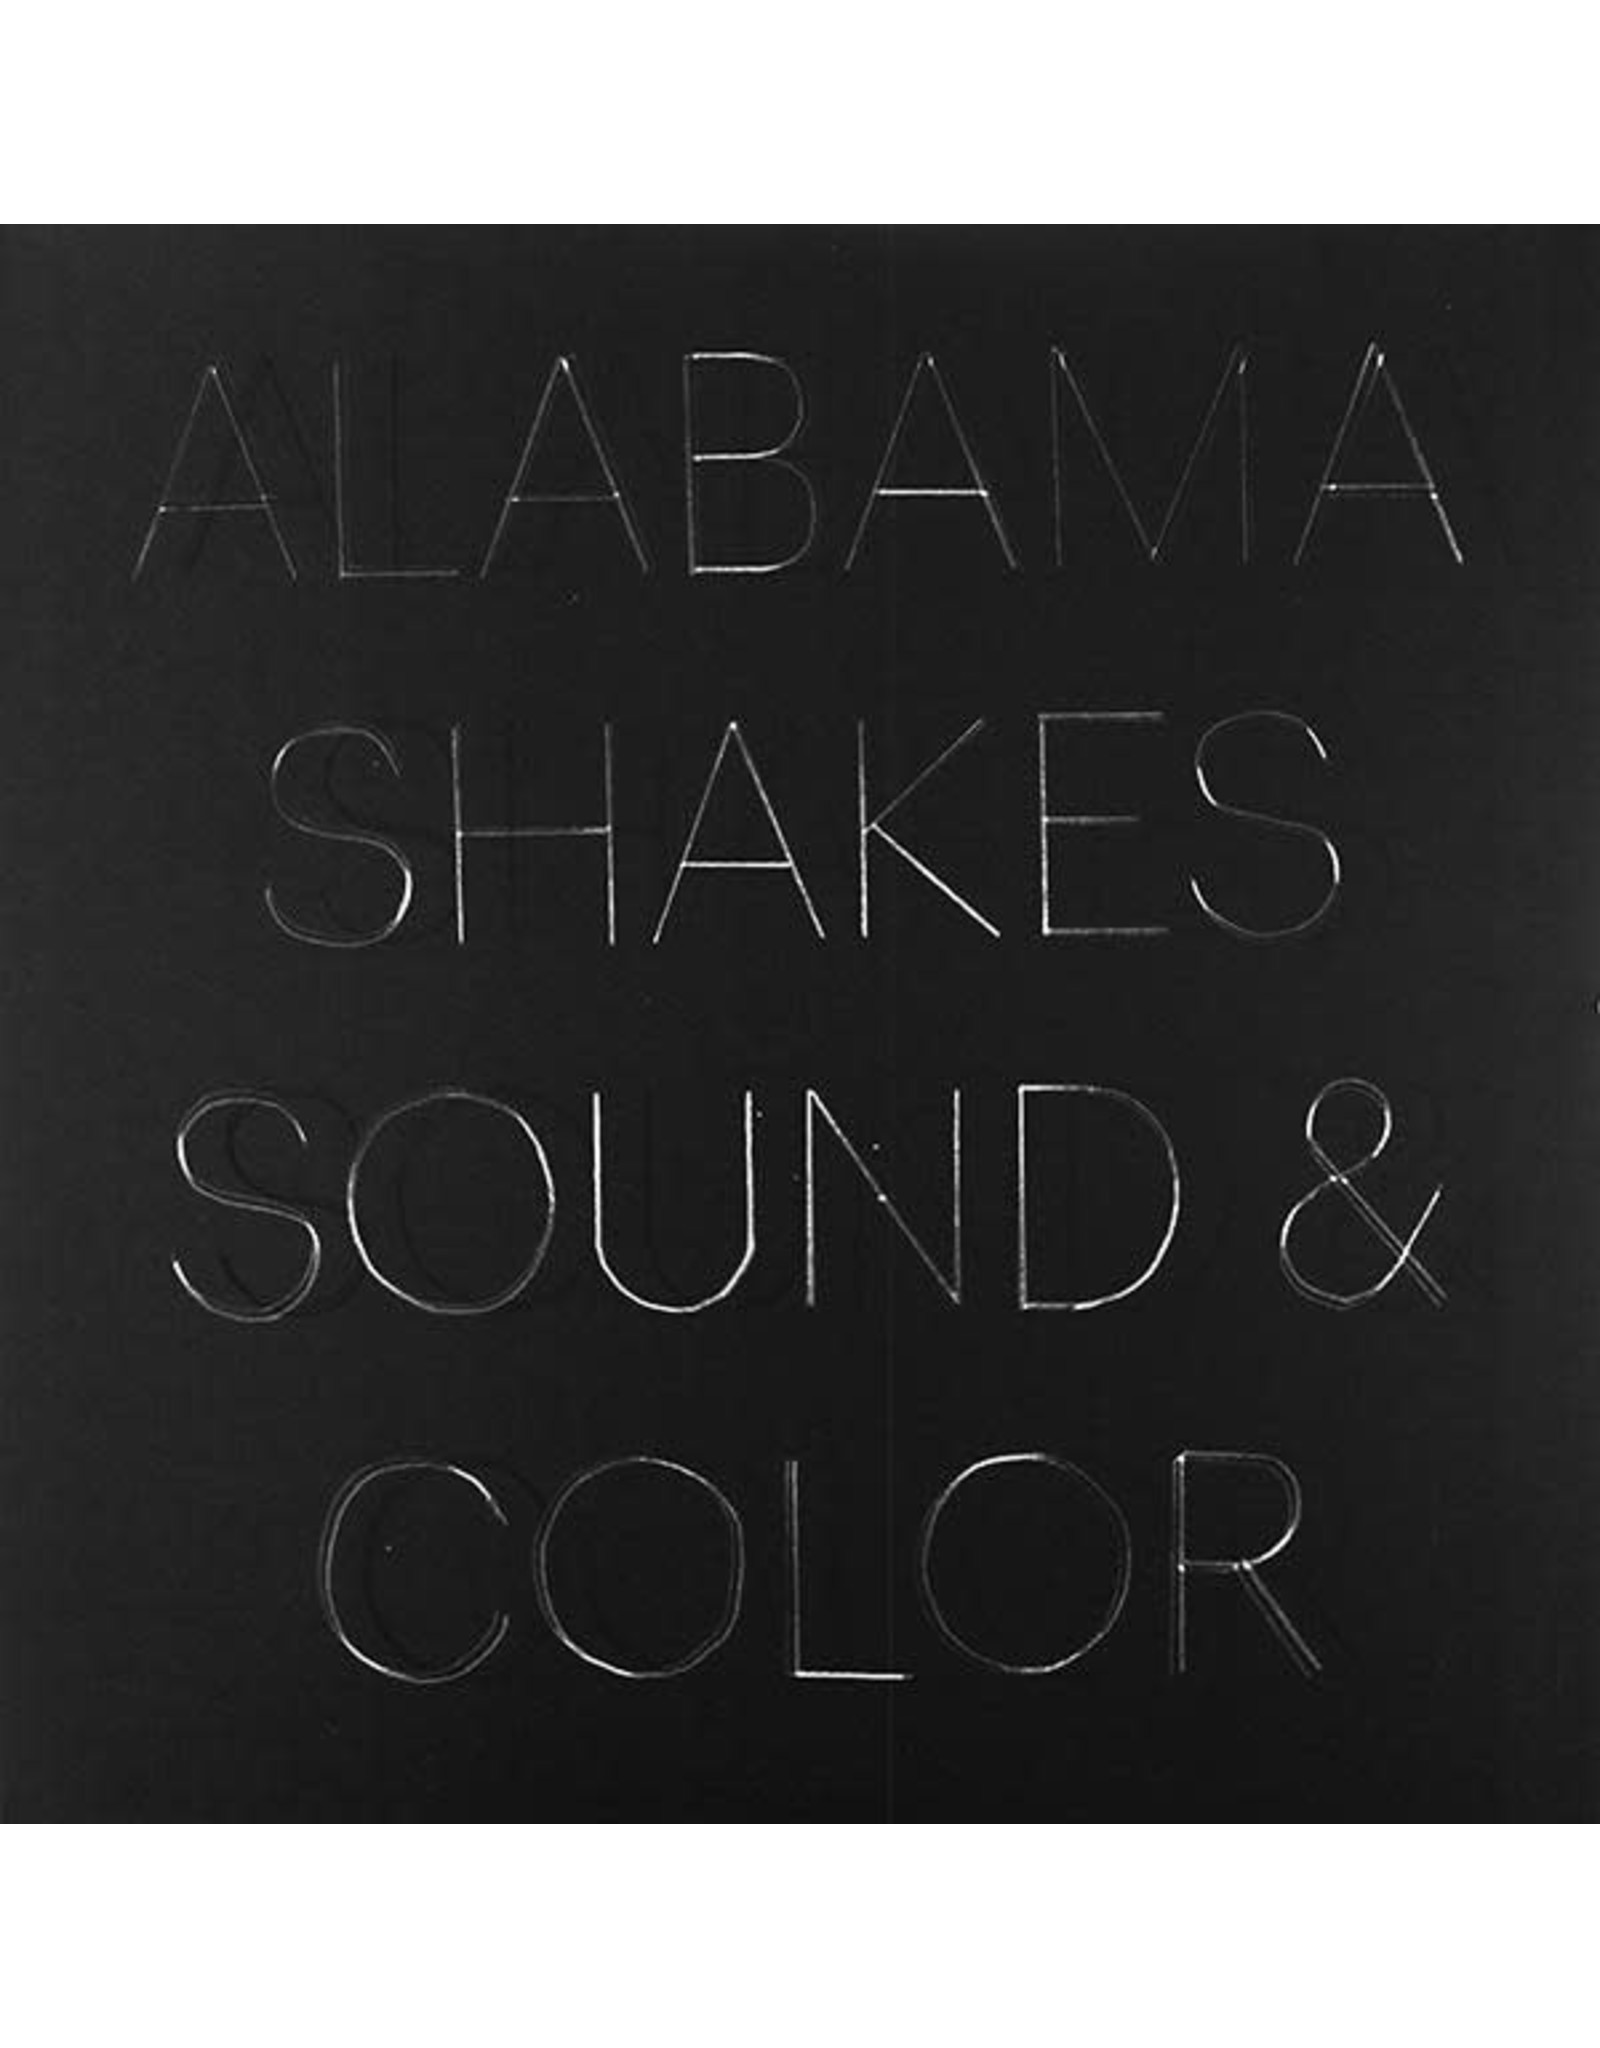 Alabama Shakes - Sound & Color (Vinyl)